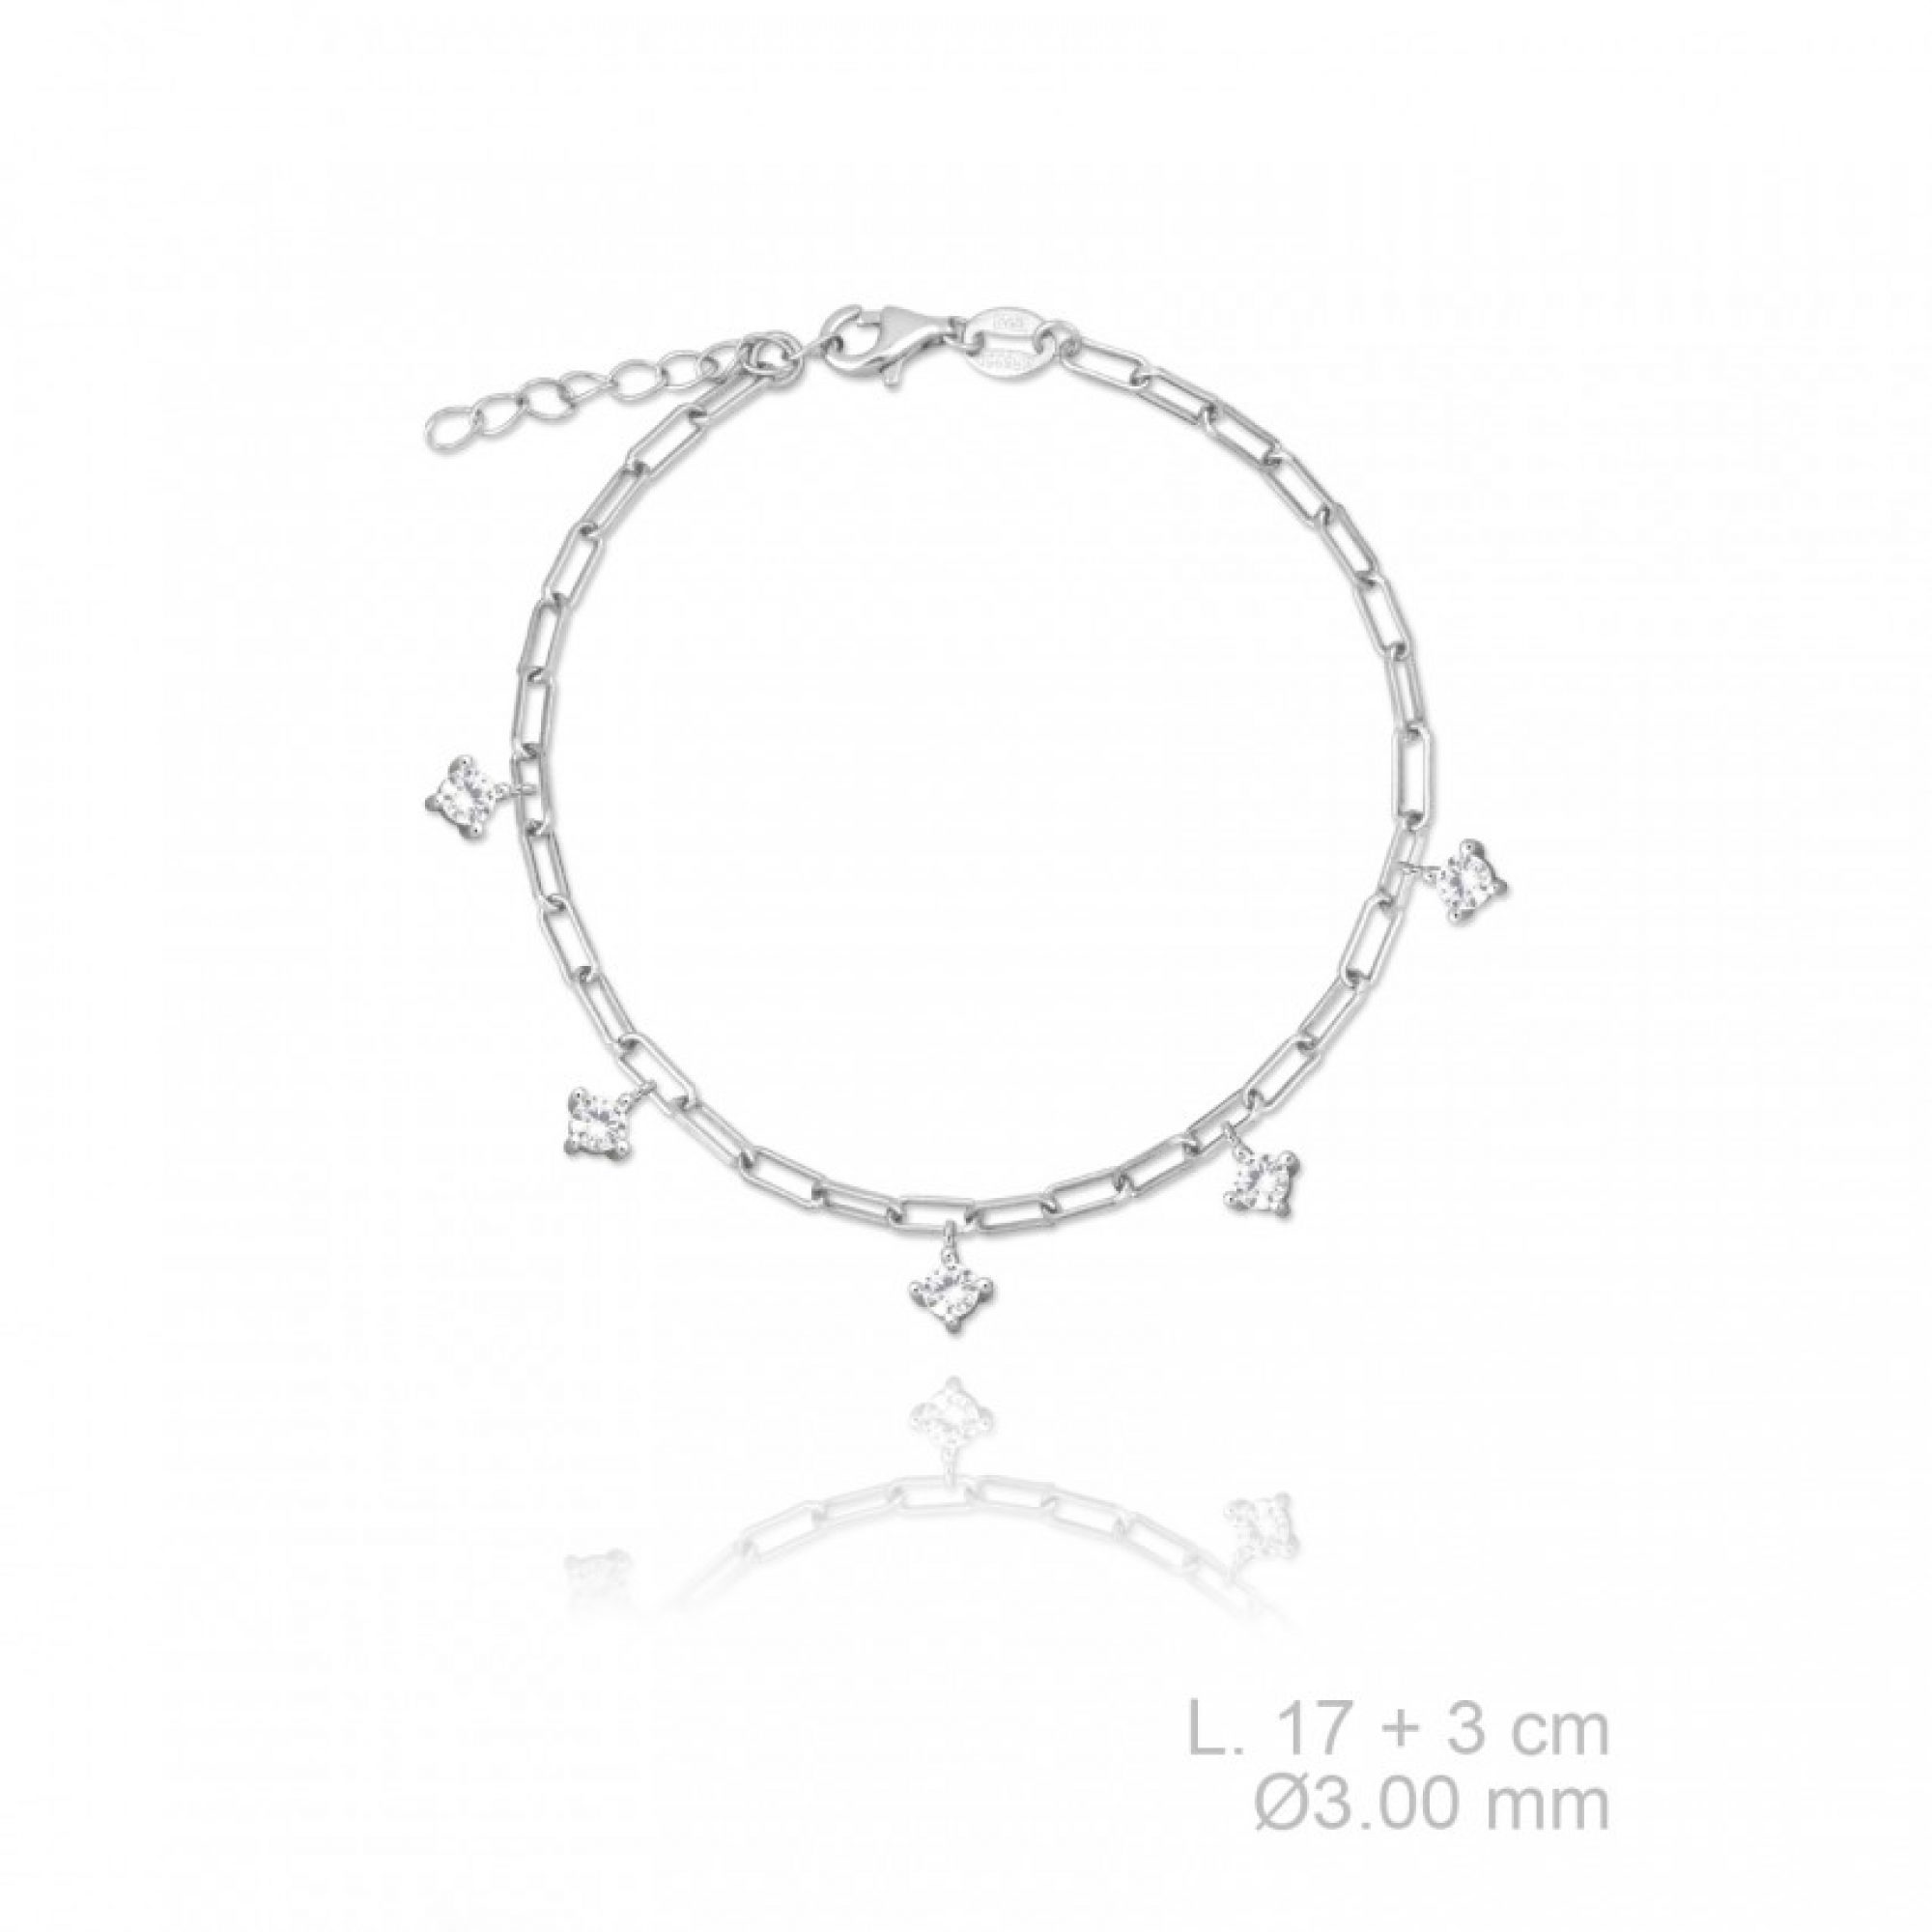 Silver bracelet with natural zircon stones